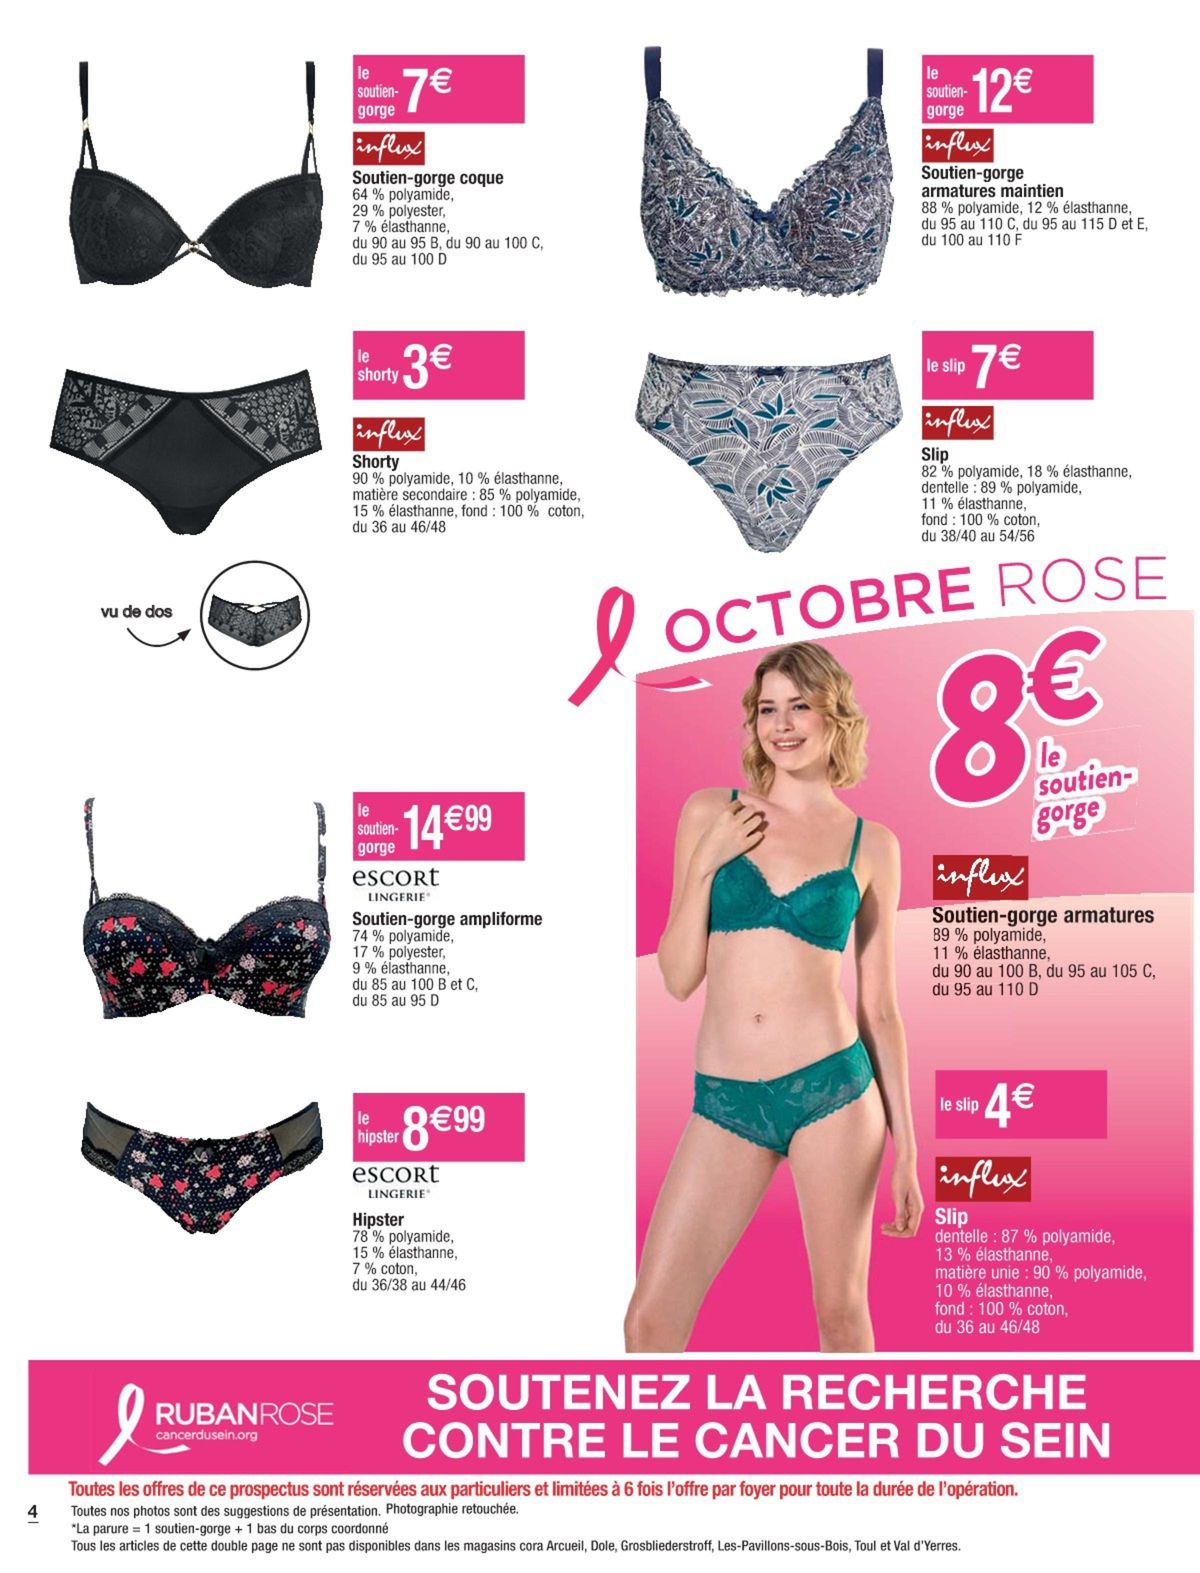 Catalogue Octobre rose, page 00010